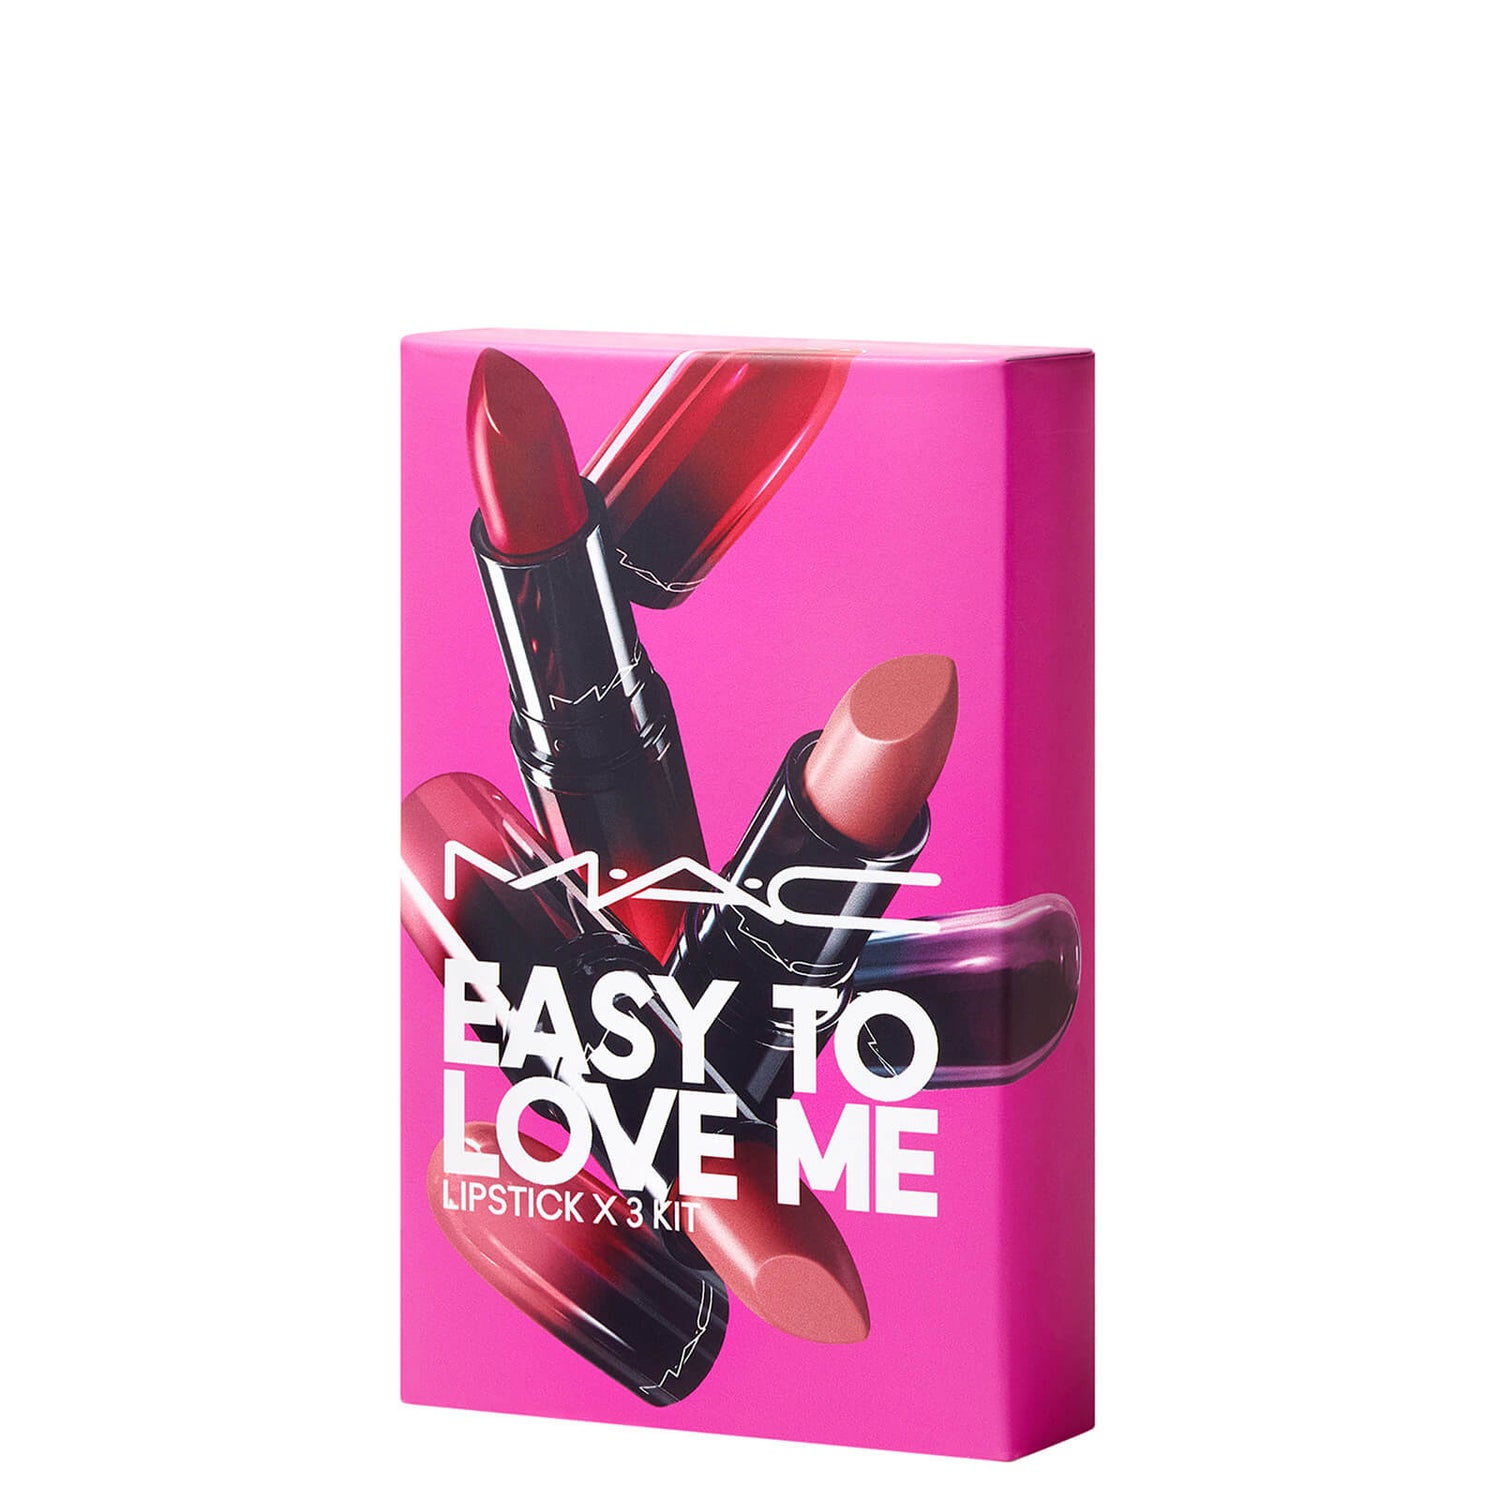 MAC Easy To Love Me Lipstick Kit (Worth £57.00)